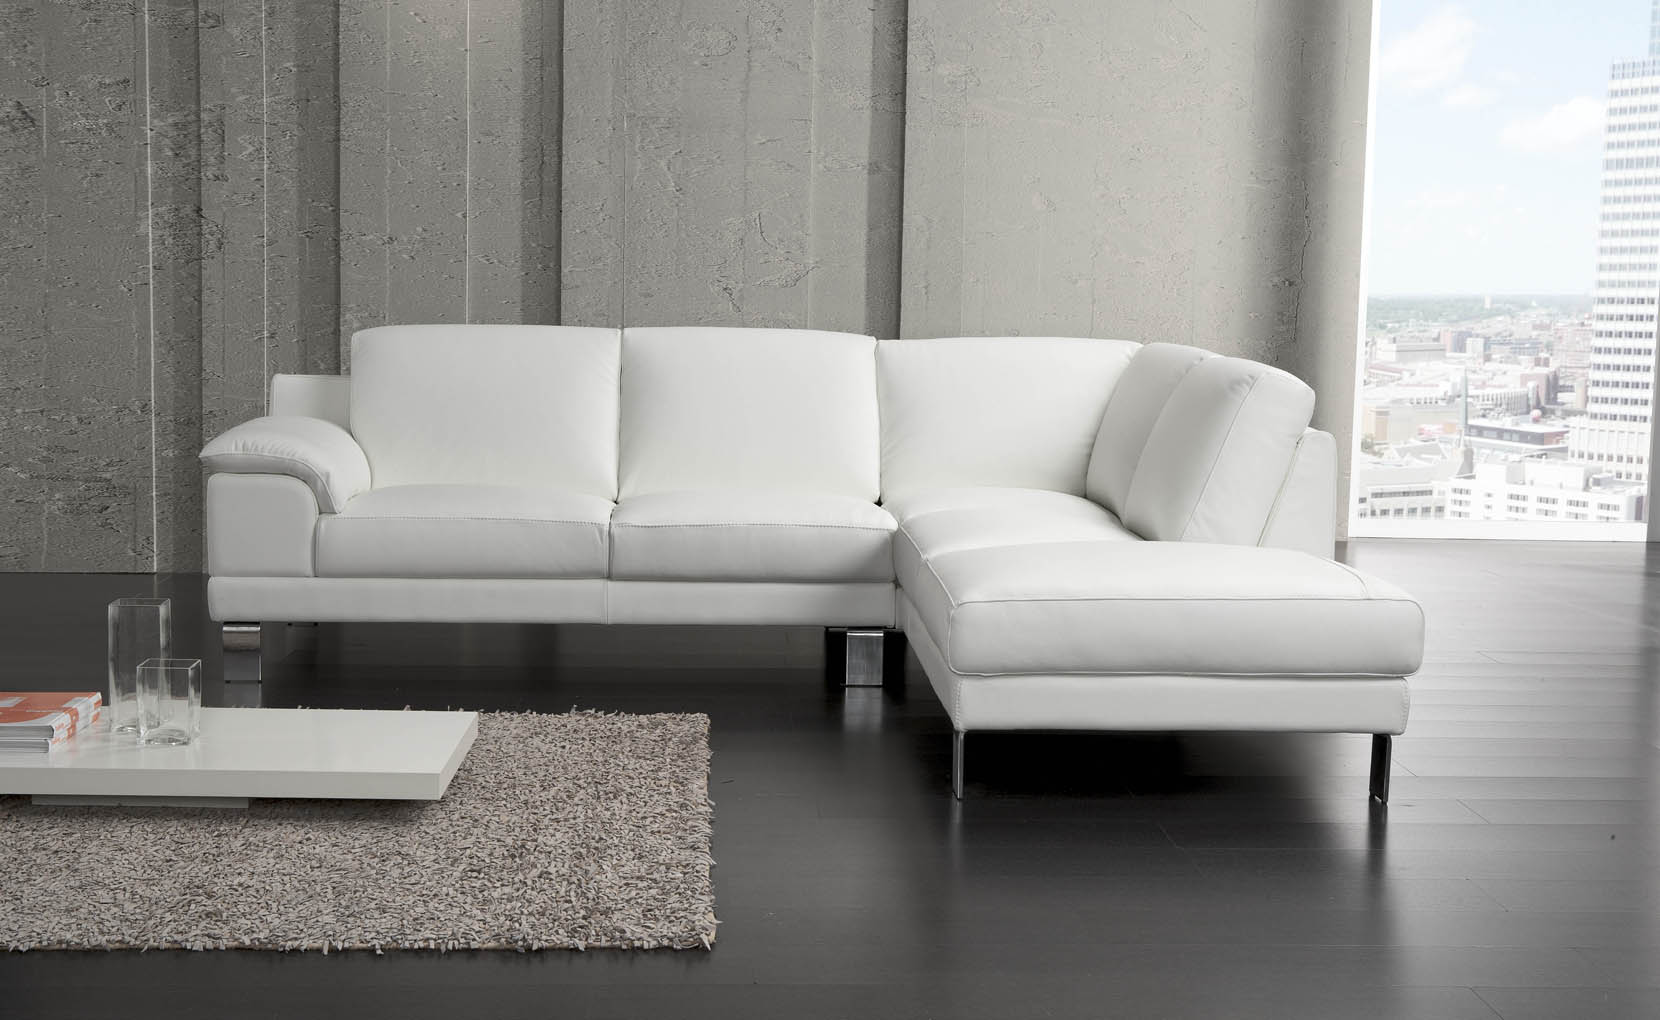 Living The Sofa Free Ultimate at Ego Italiano available Company.